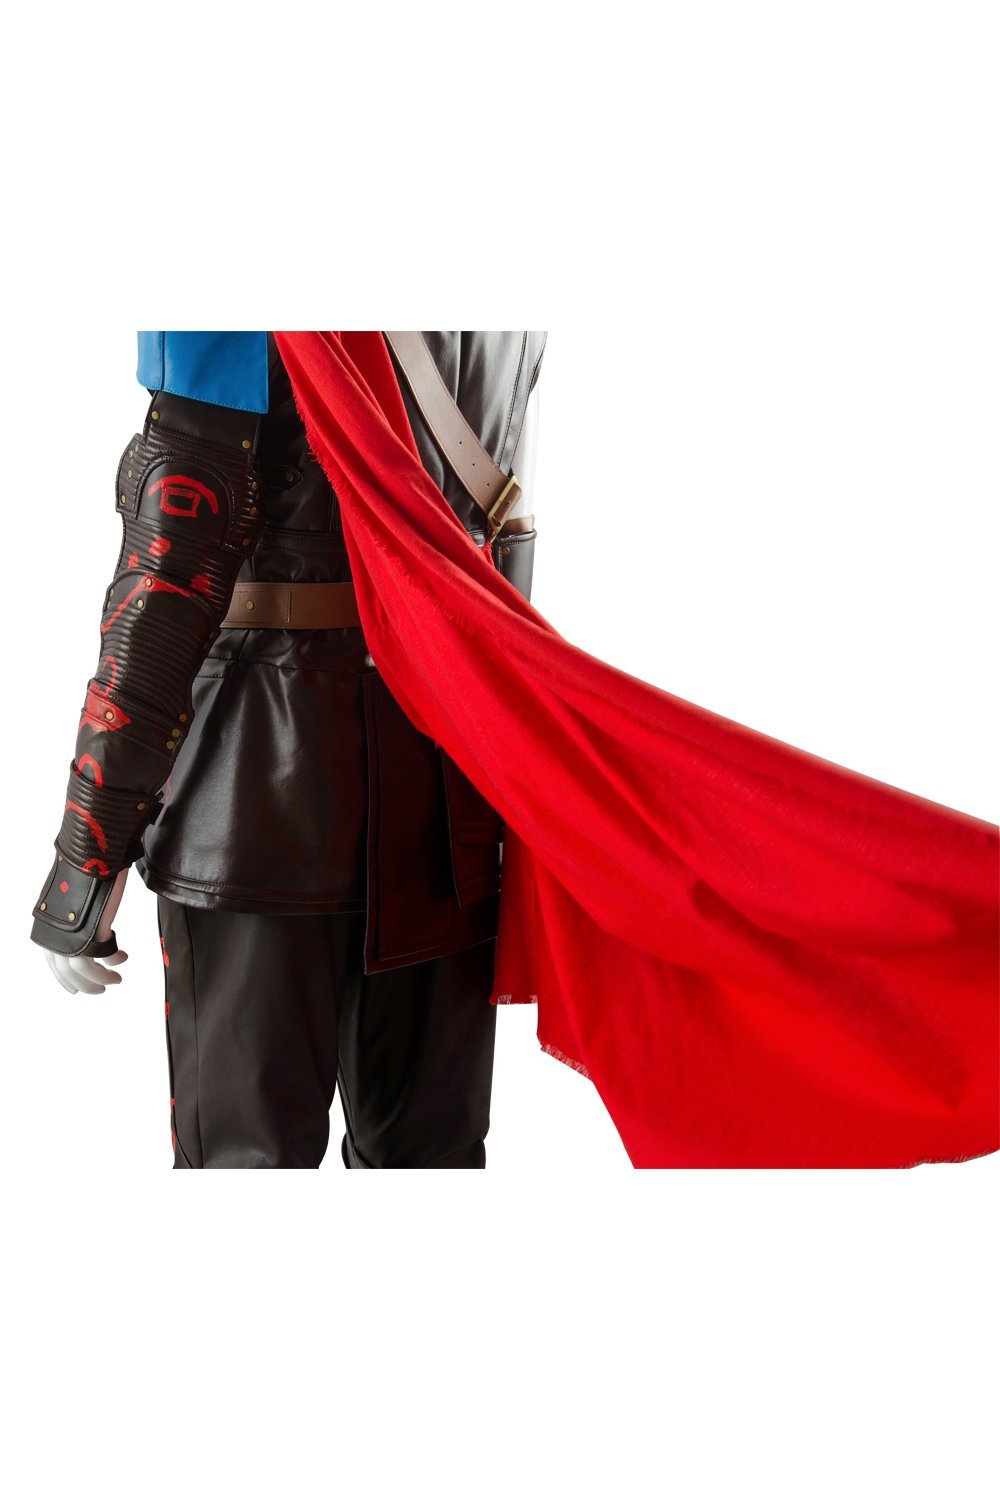 SeeCospaly Thor 3 Ragnarok Thor Gladiator Costume Whole Set Cosplay Costume SMan